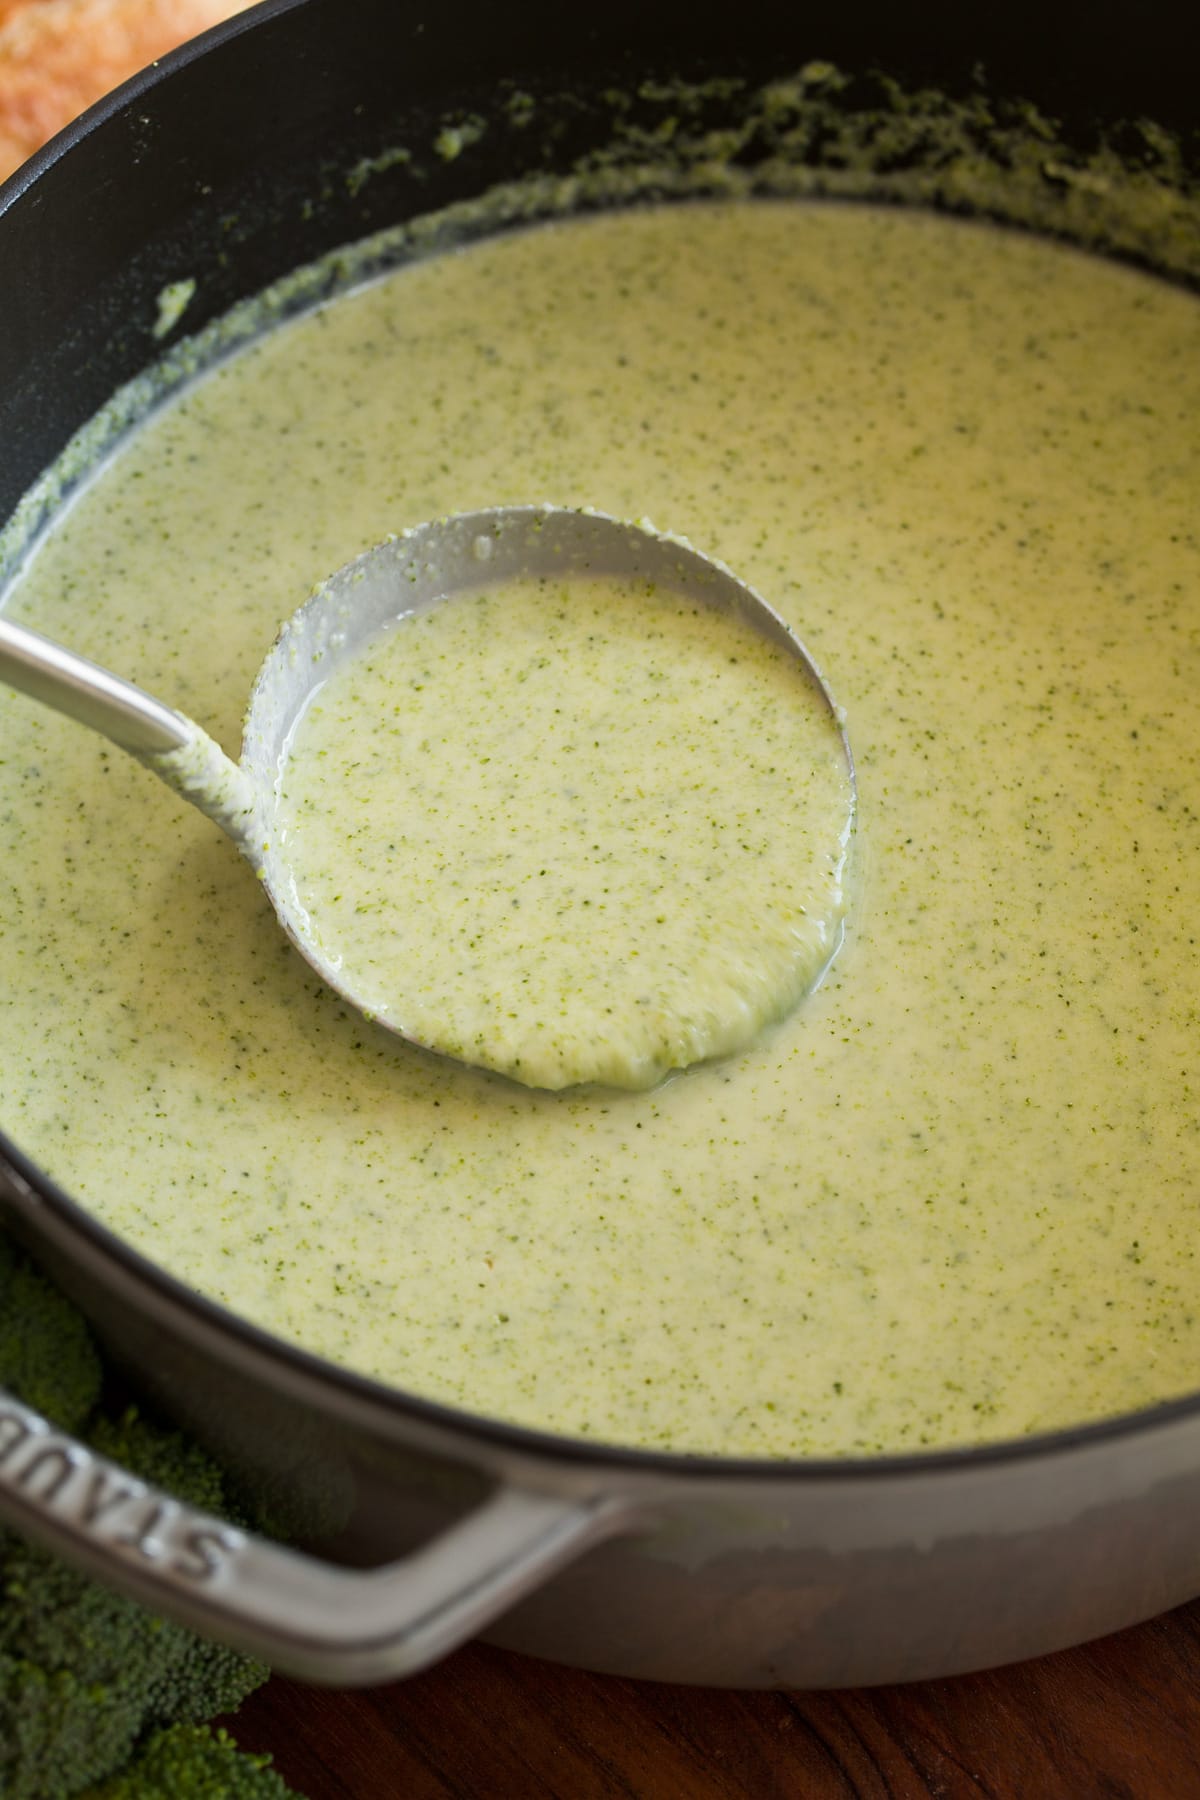 Ladle full of broccoli soup.